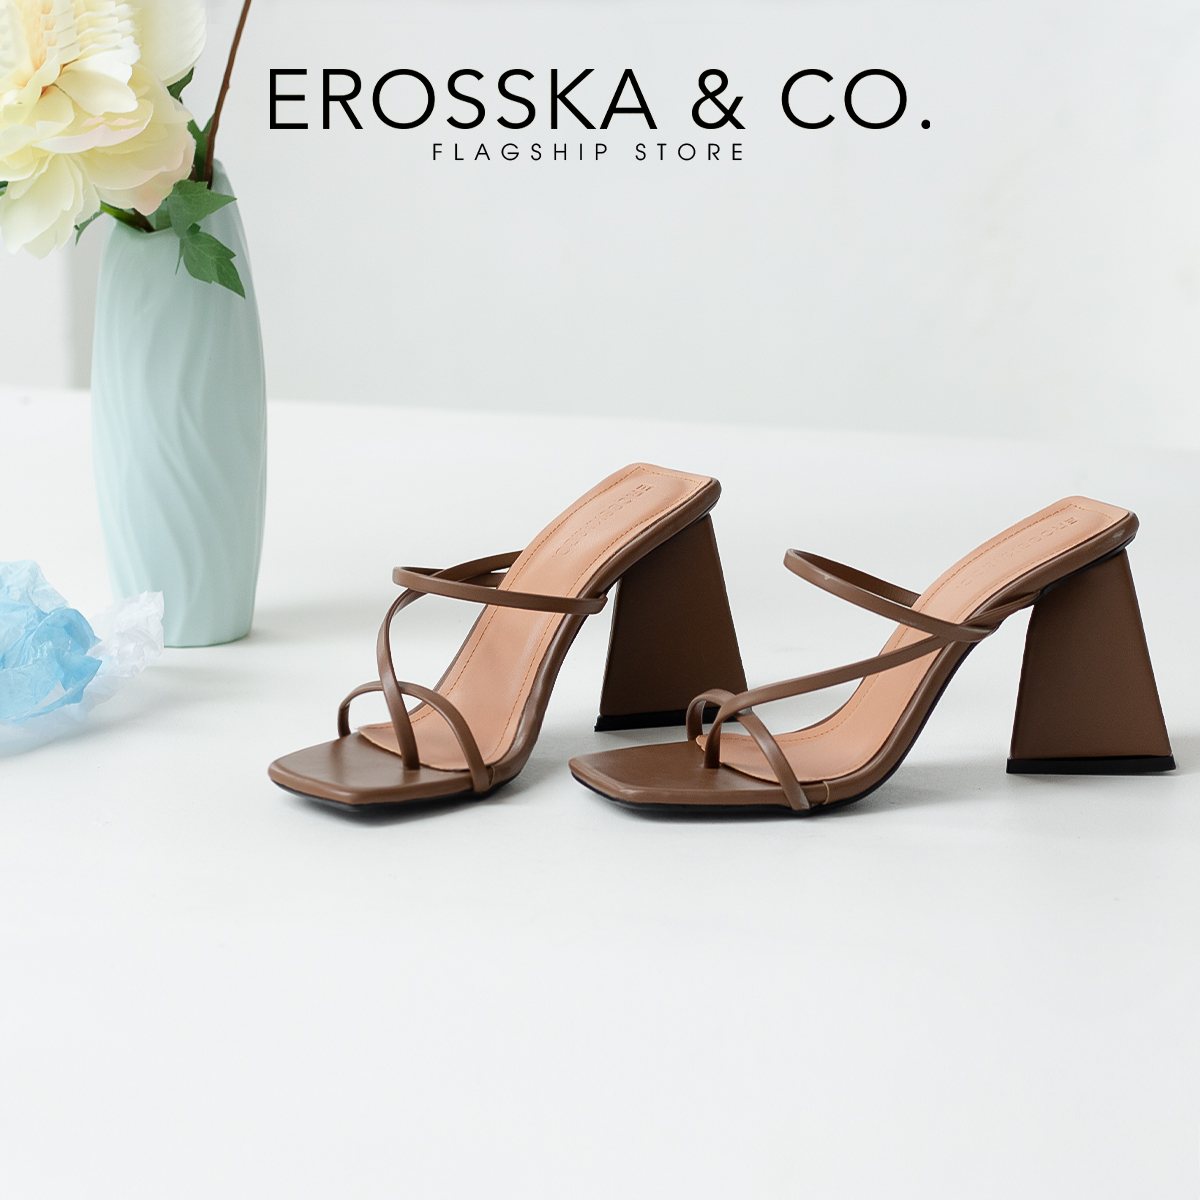 Erosska - Dép cao gót nữ mũi vuông phối quai mảnh cao 9cm EM088